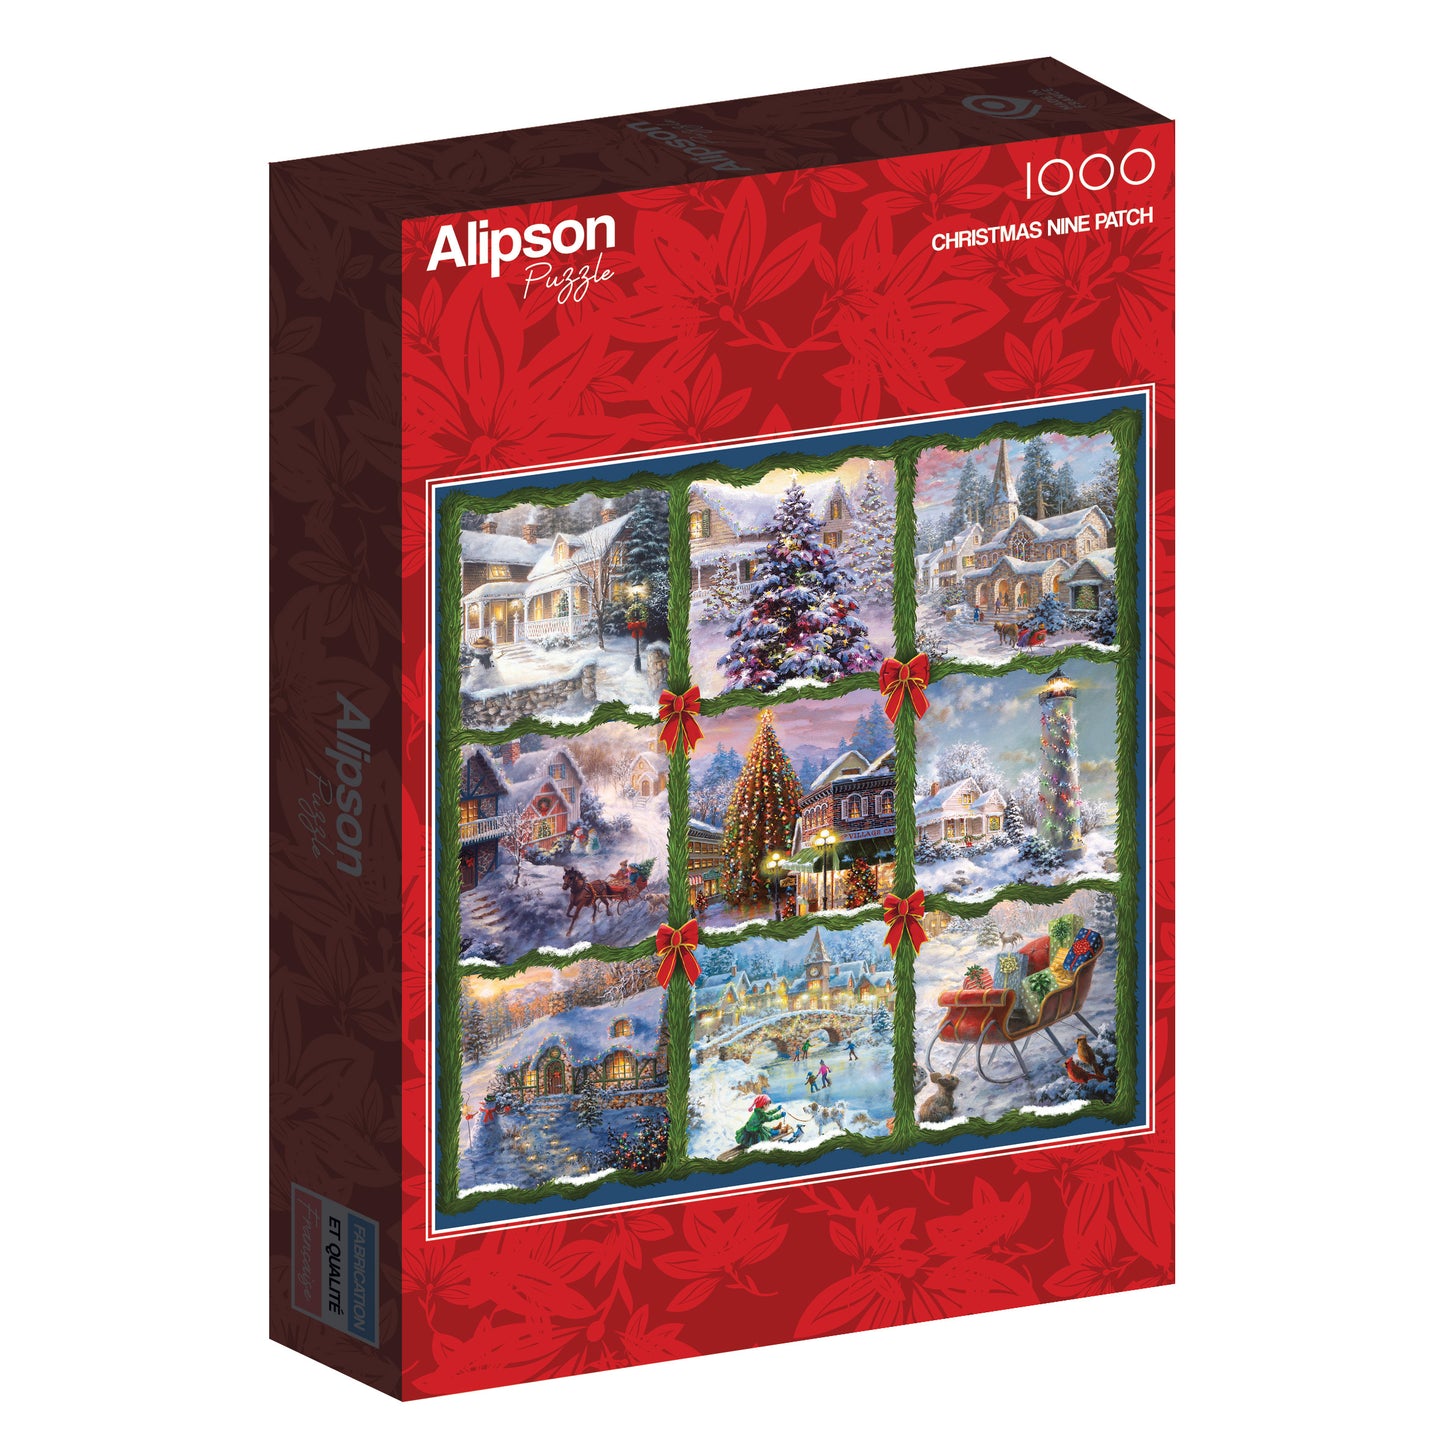 Alipson - Christmas Nine Patch - 1000 Piece Jigsaw Puzzle